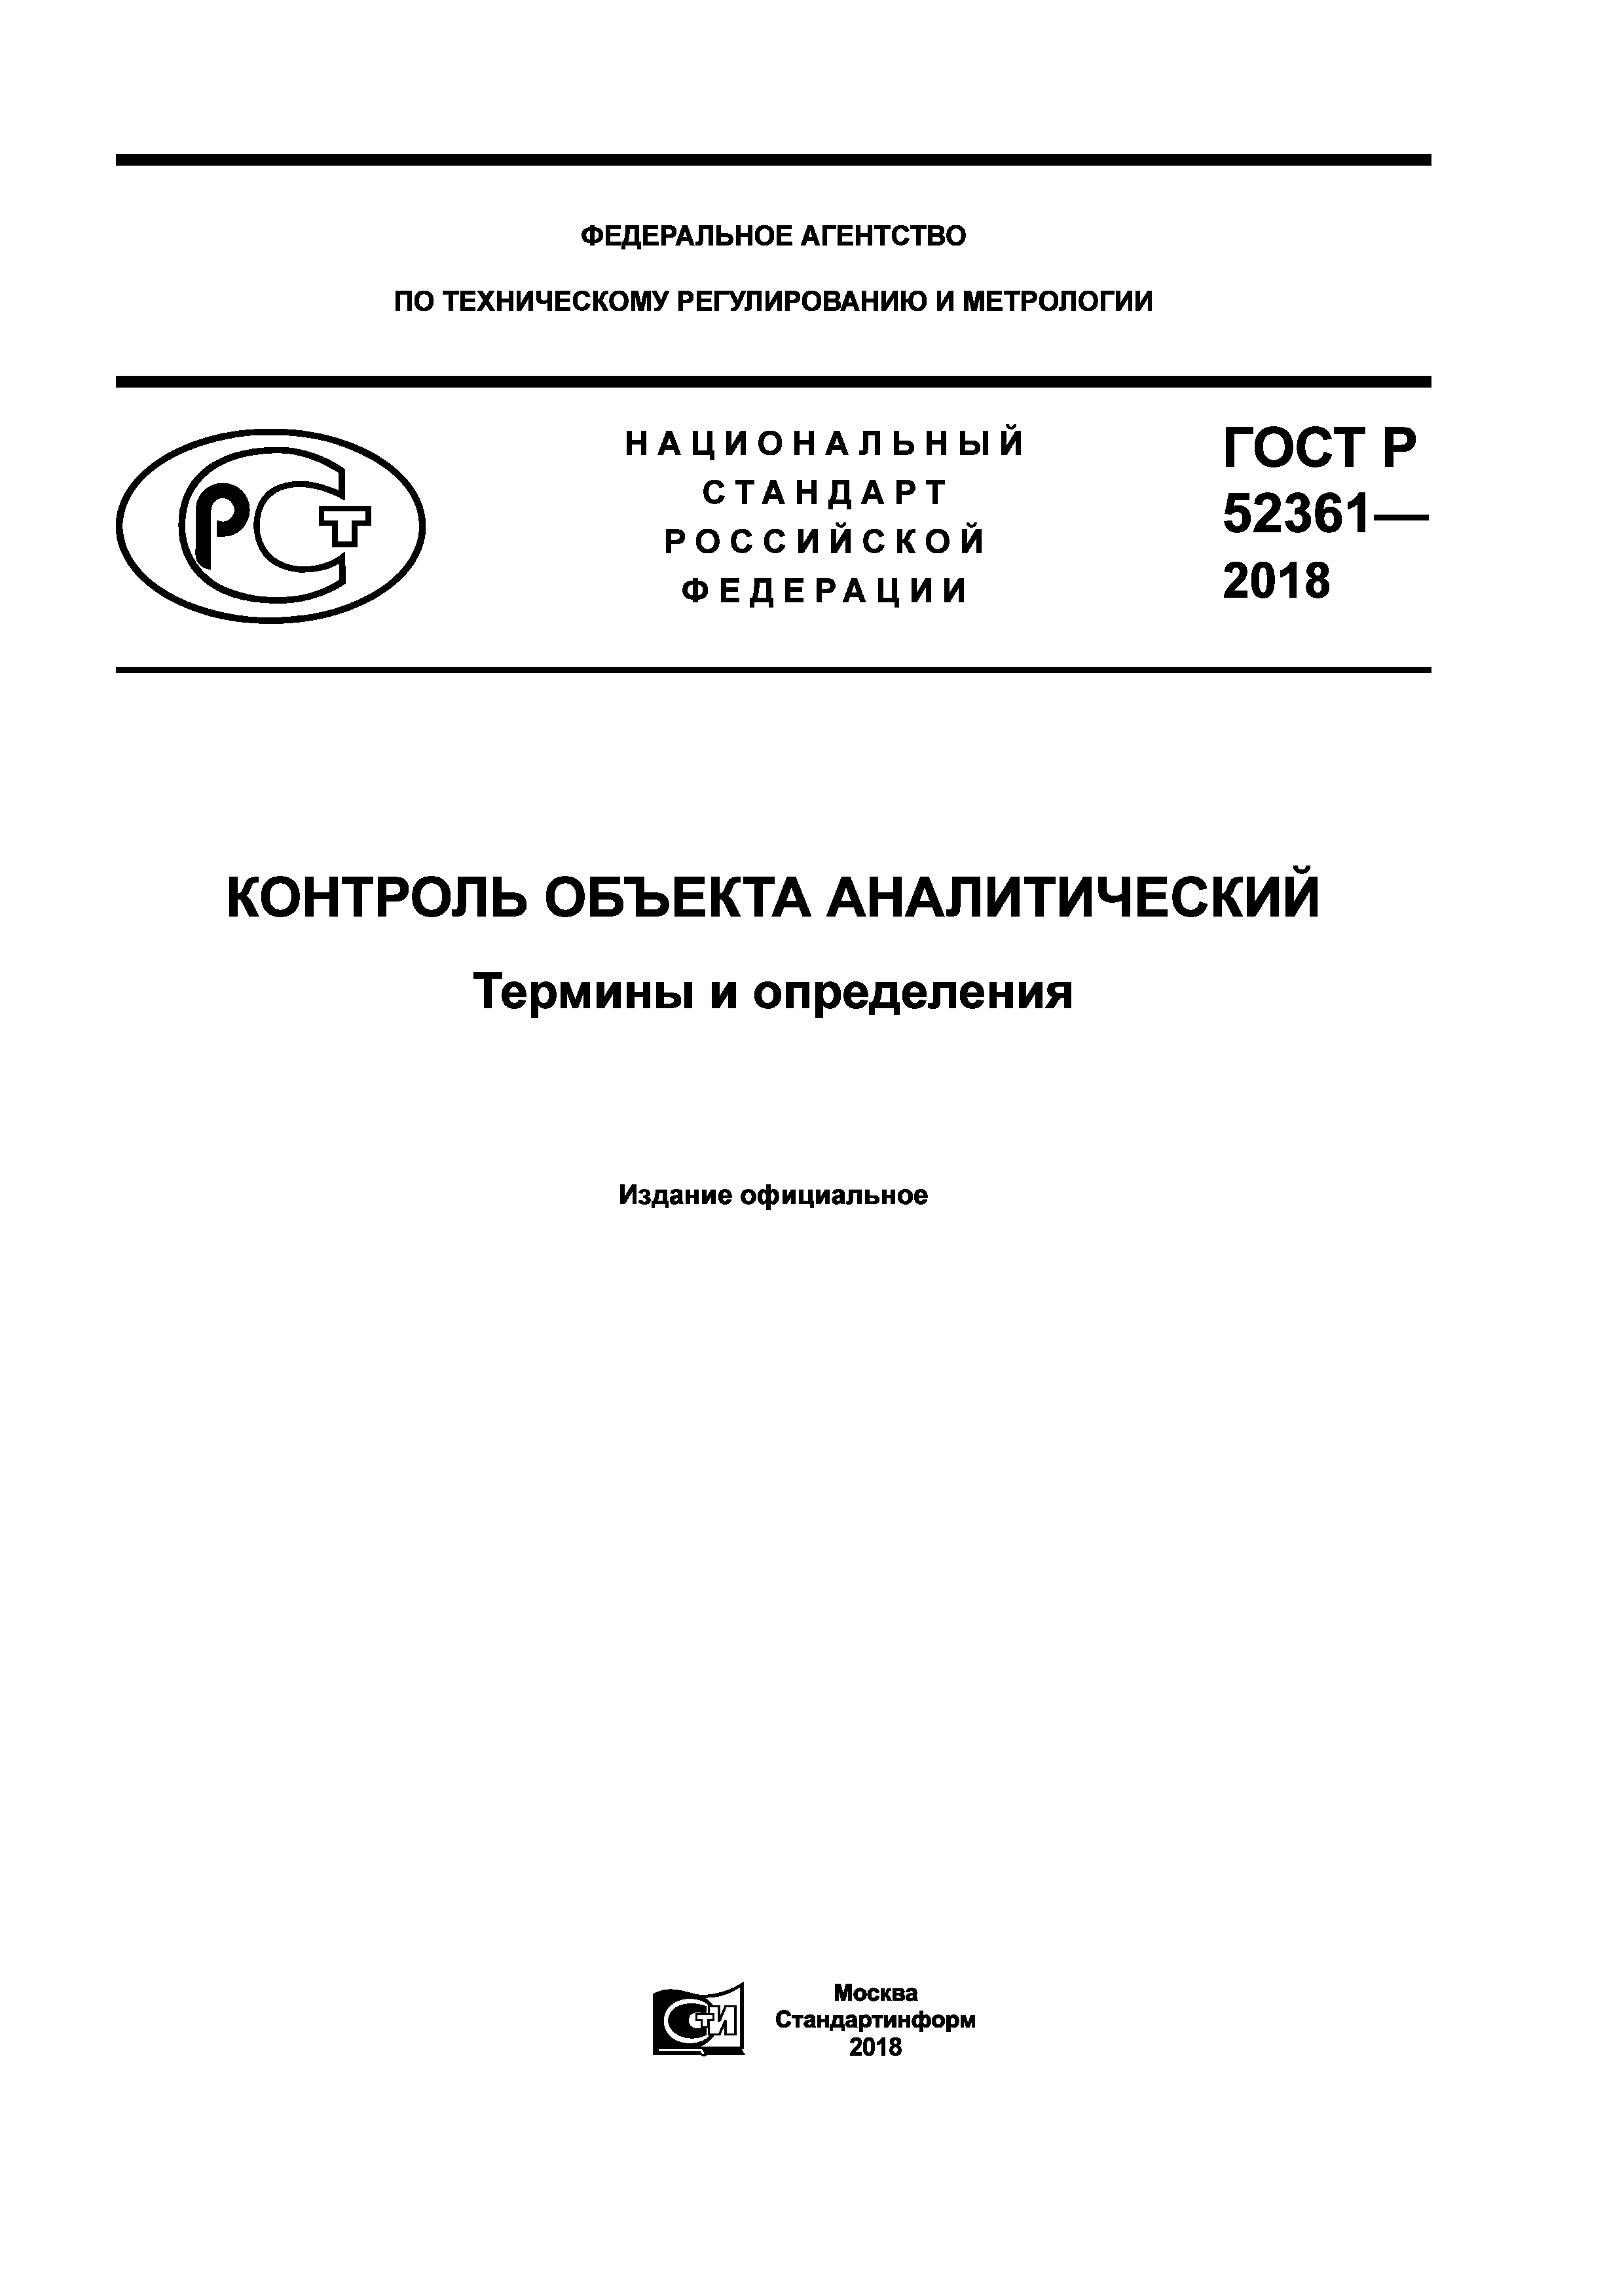 ГОСТ Р 52361-2018